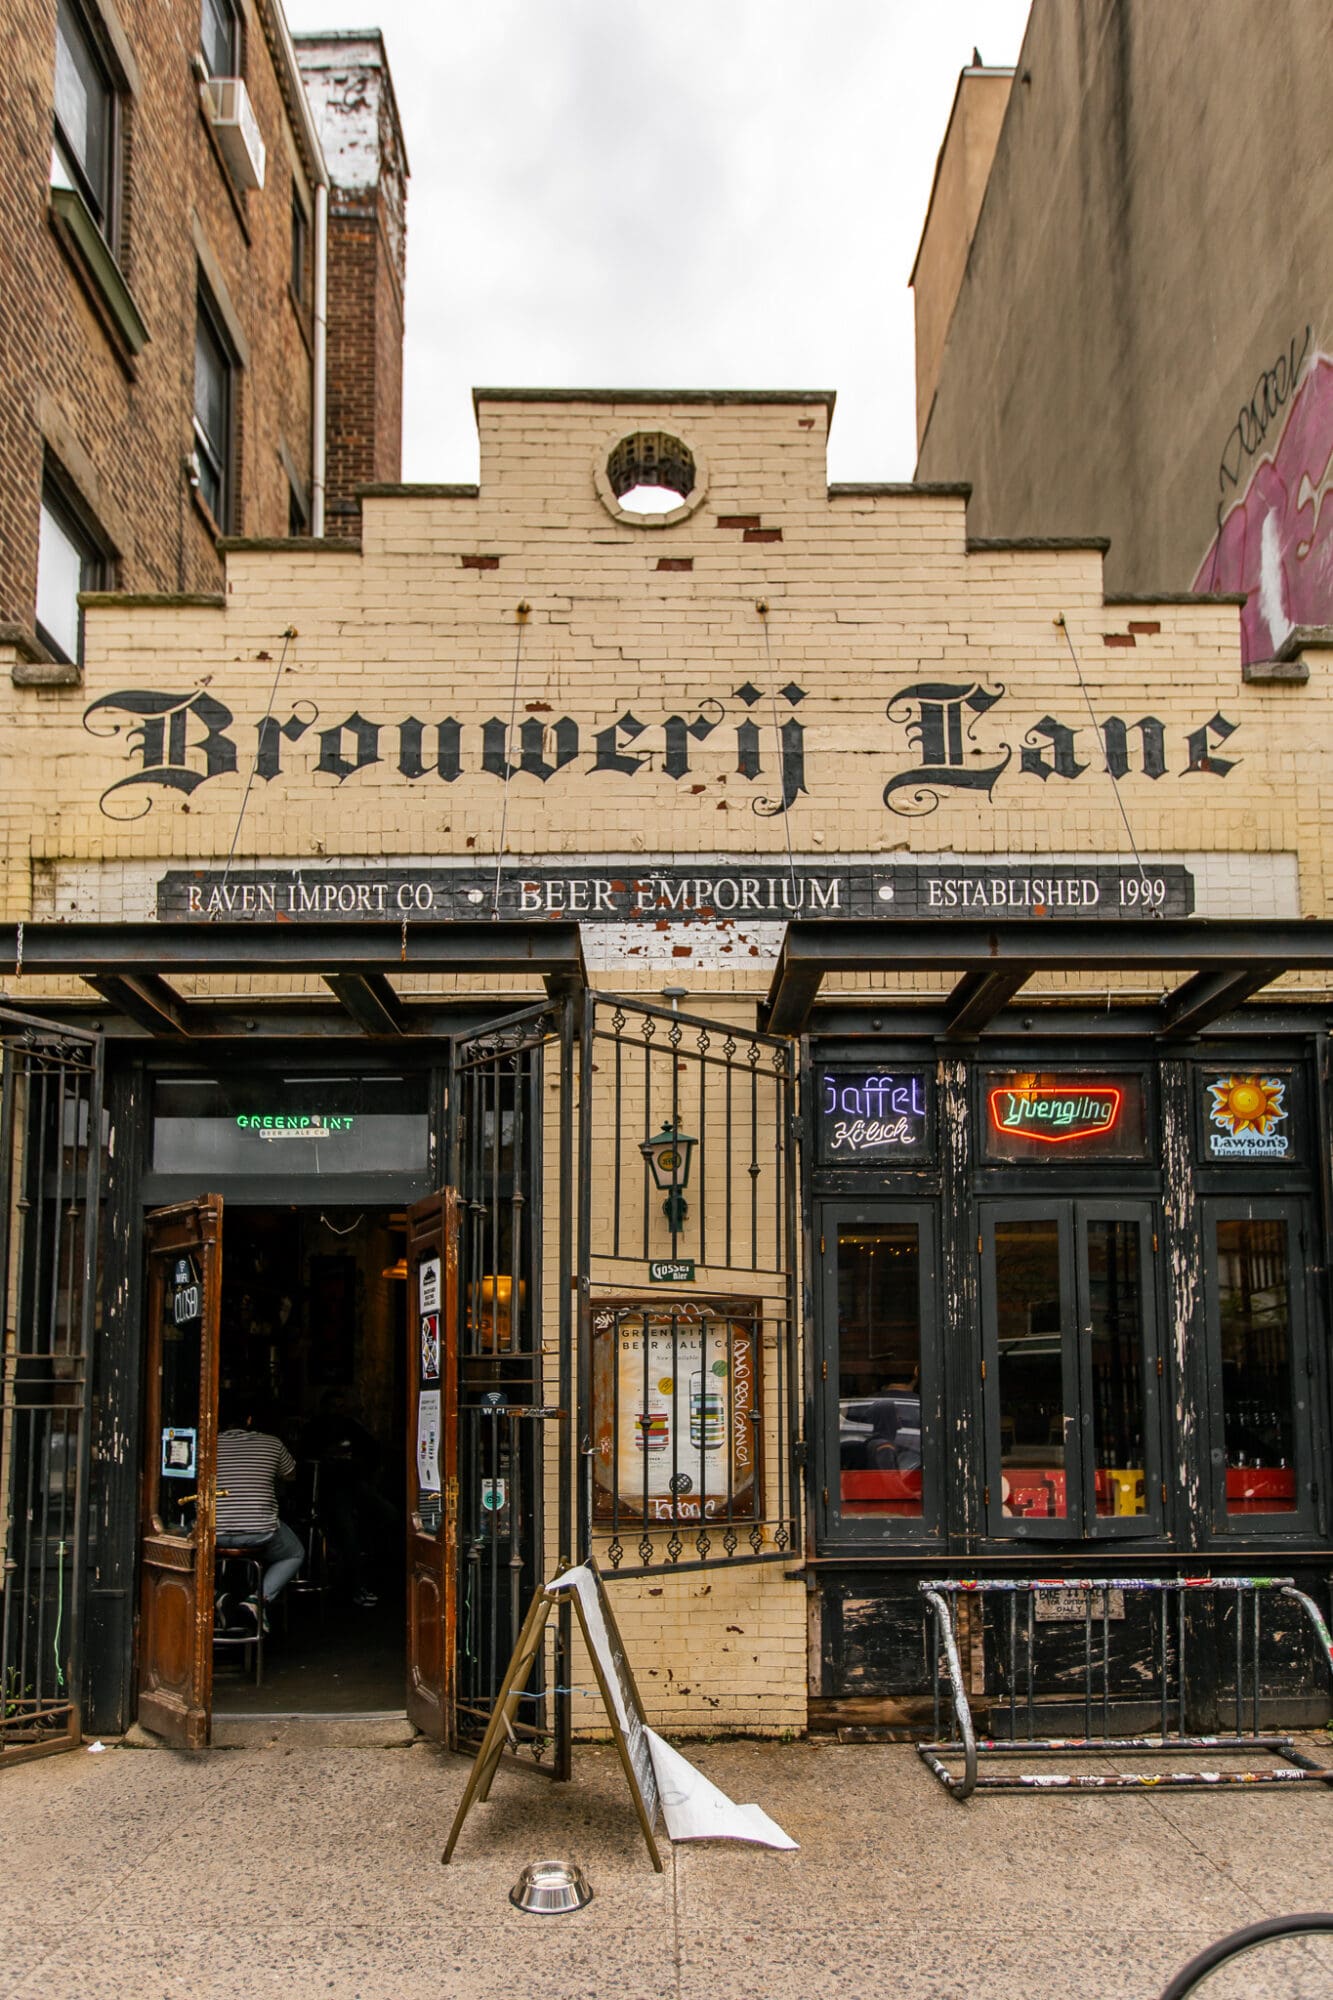 Brouwerij Lane Beer Store and Bar in Brooklyn